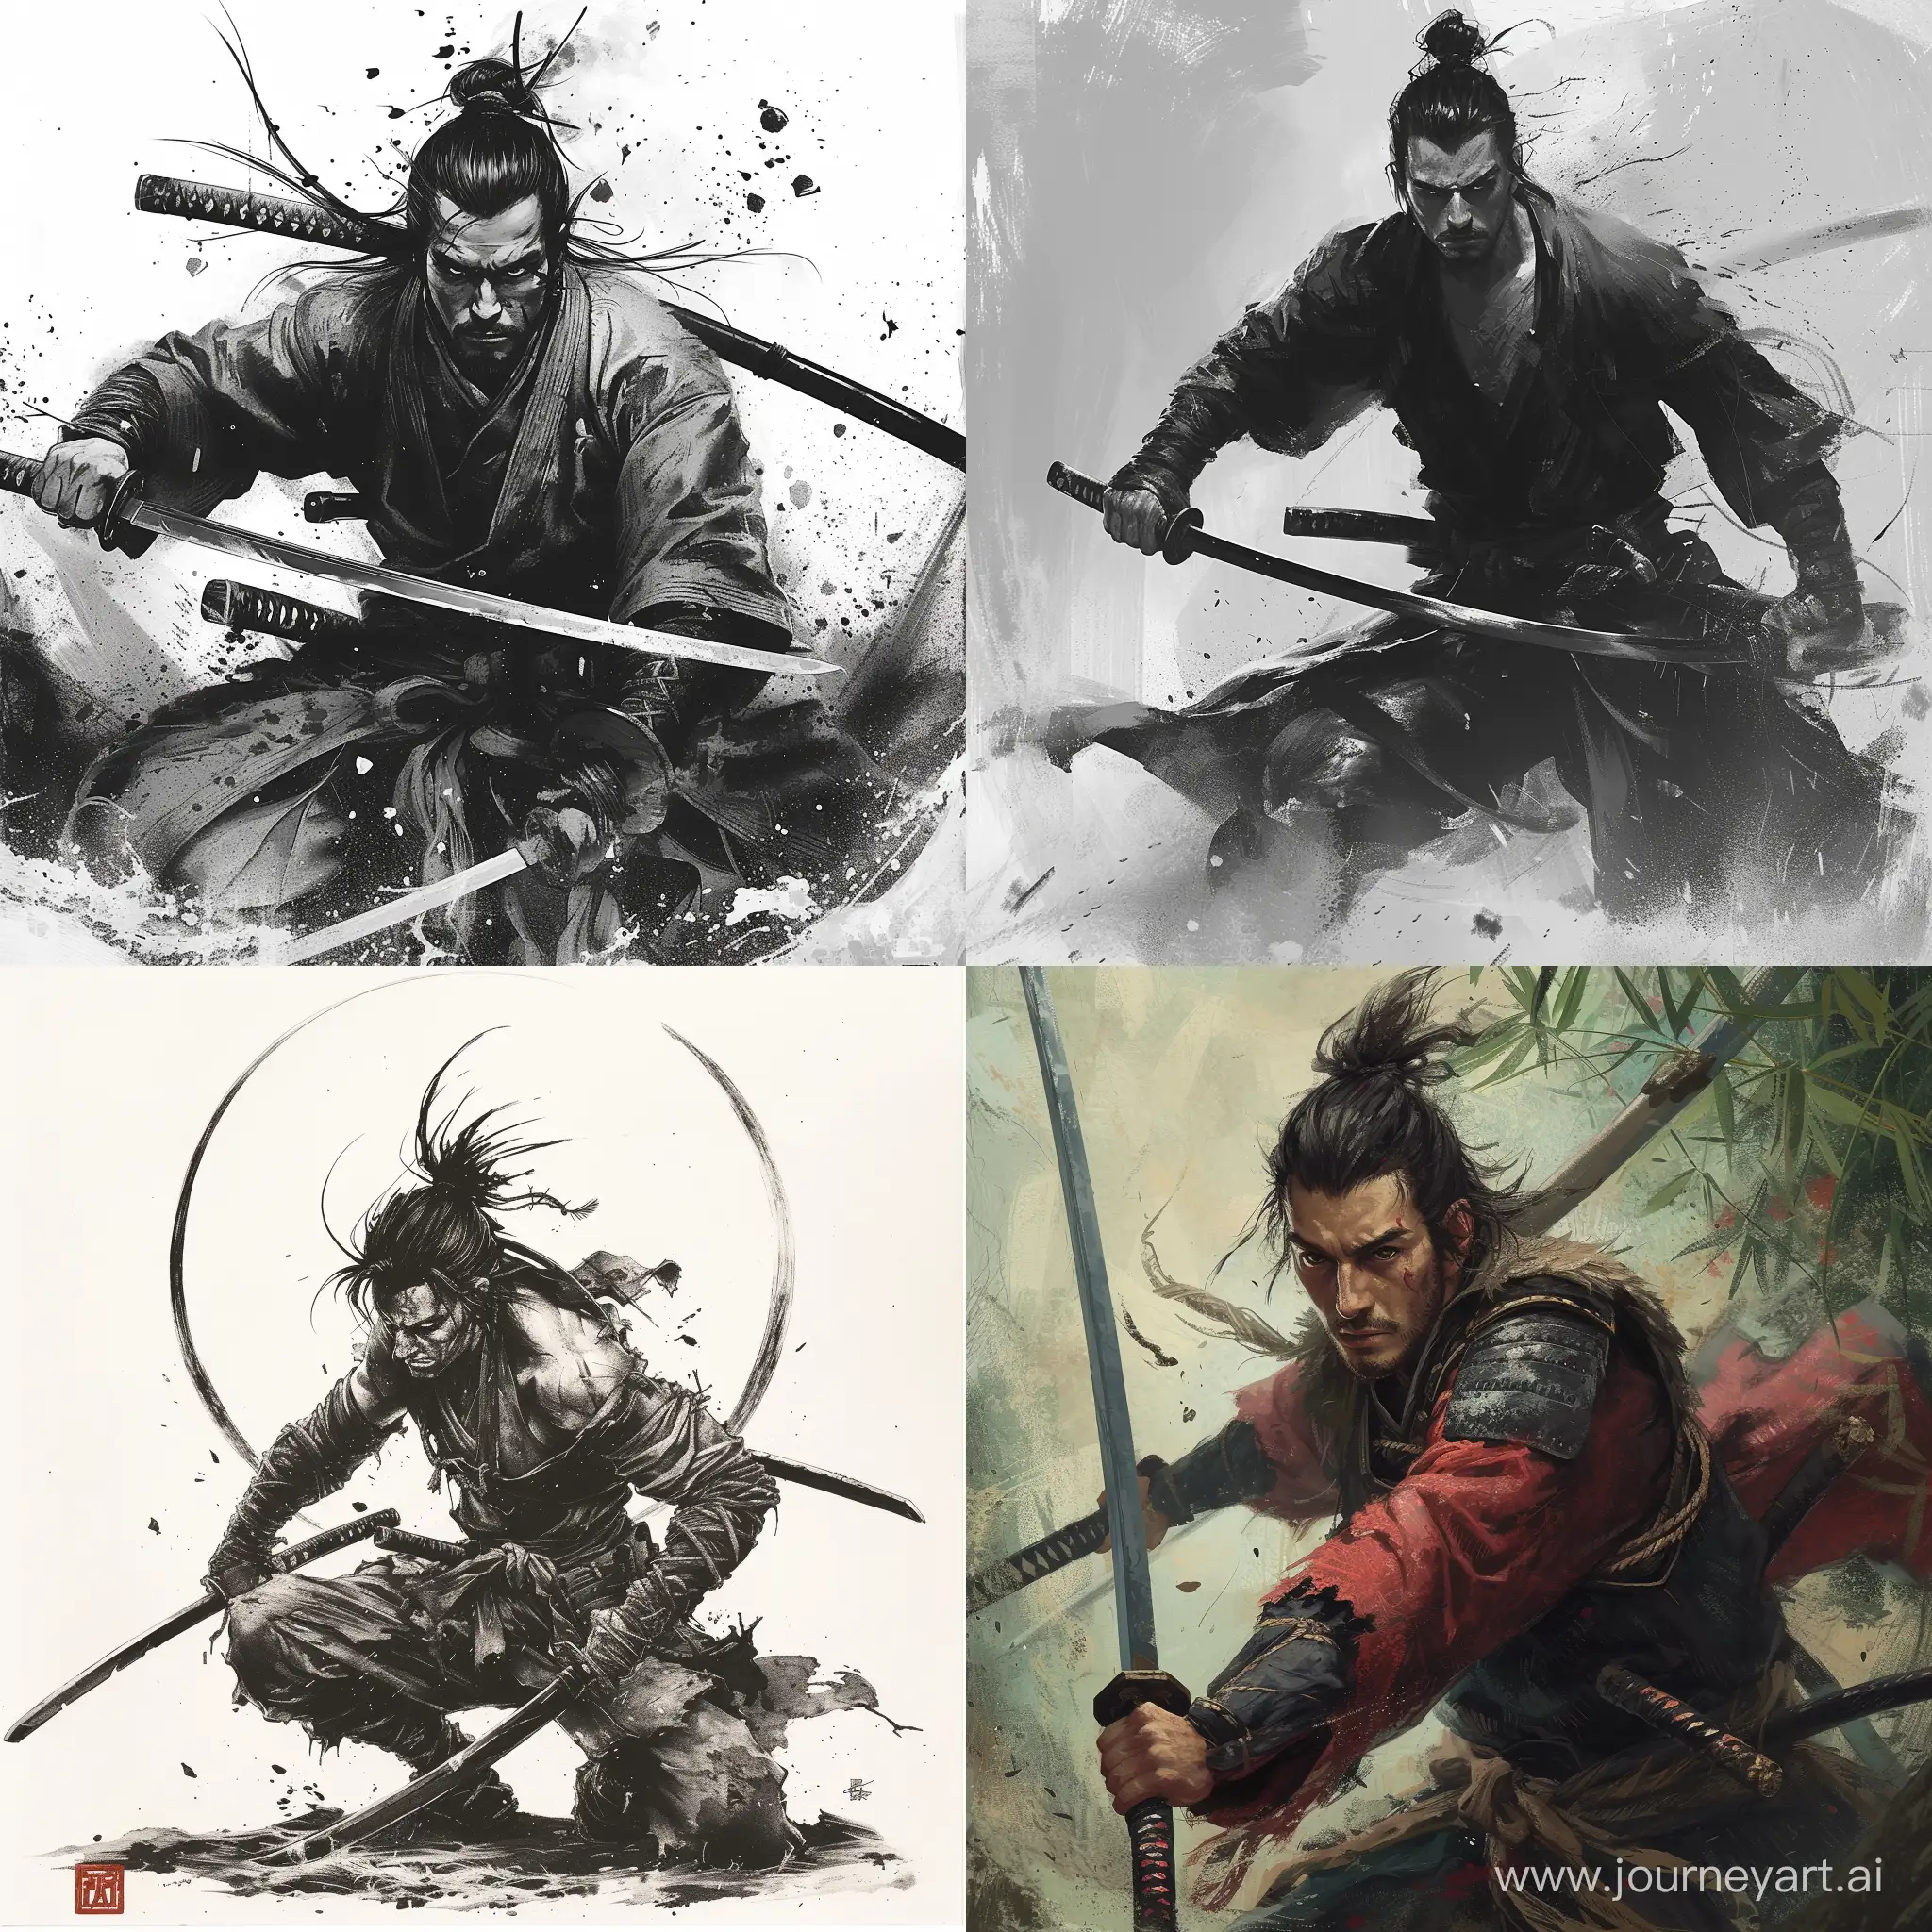 Dynamic-Samurai-Warrior-in-Frank-Cho-Style